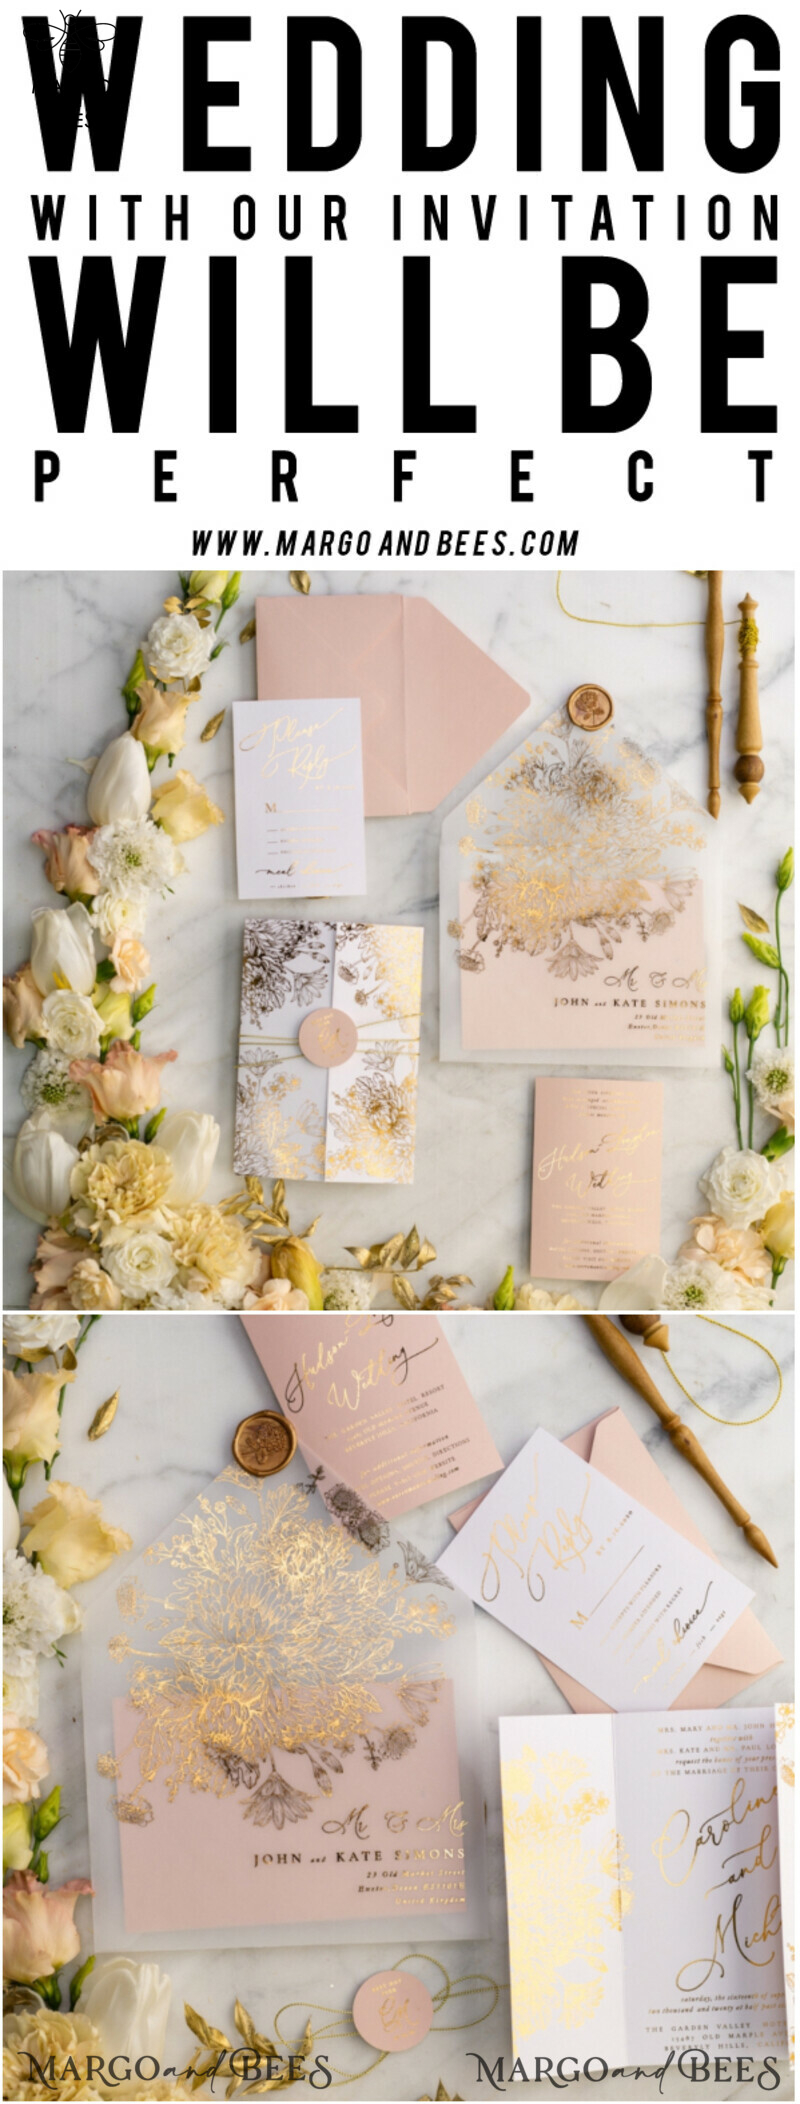 Elegant Luxury Arabic Golden Wedding Invitations with Glamour Gold Foil and Romantic Blush Pink Design: Bespoke Indian Wedding Stationery-37